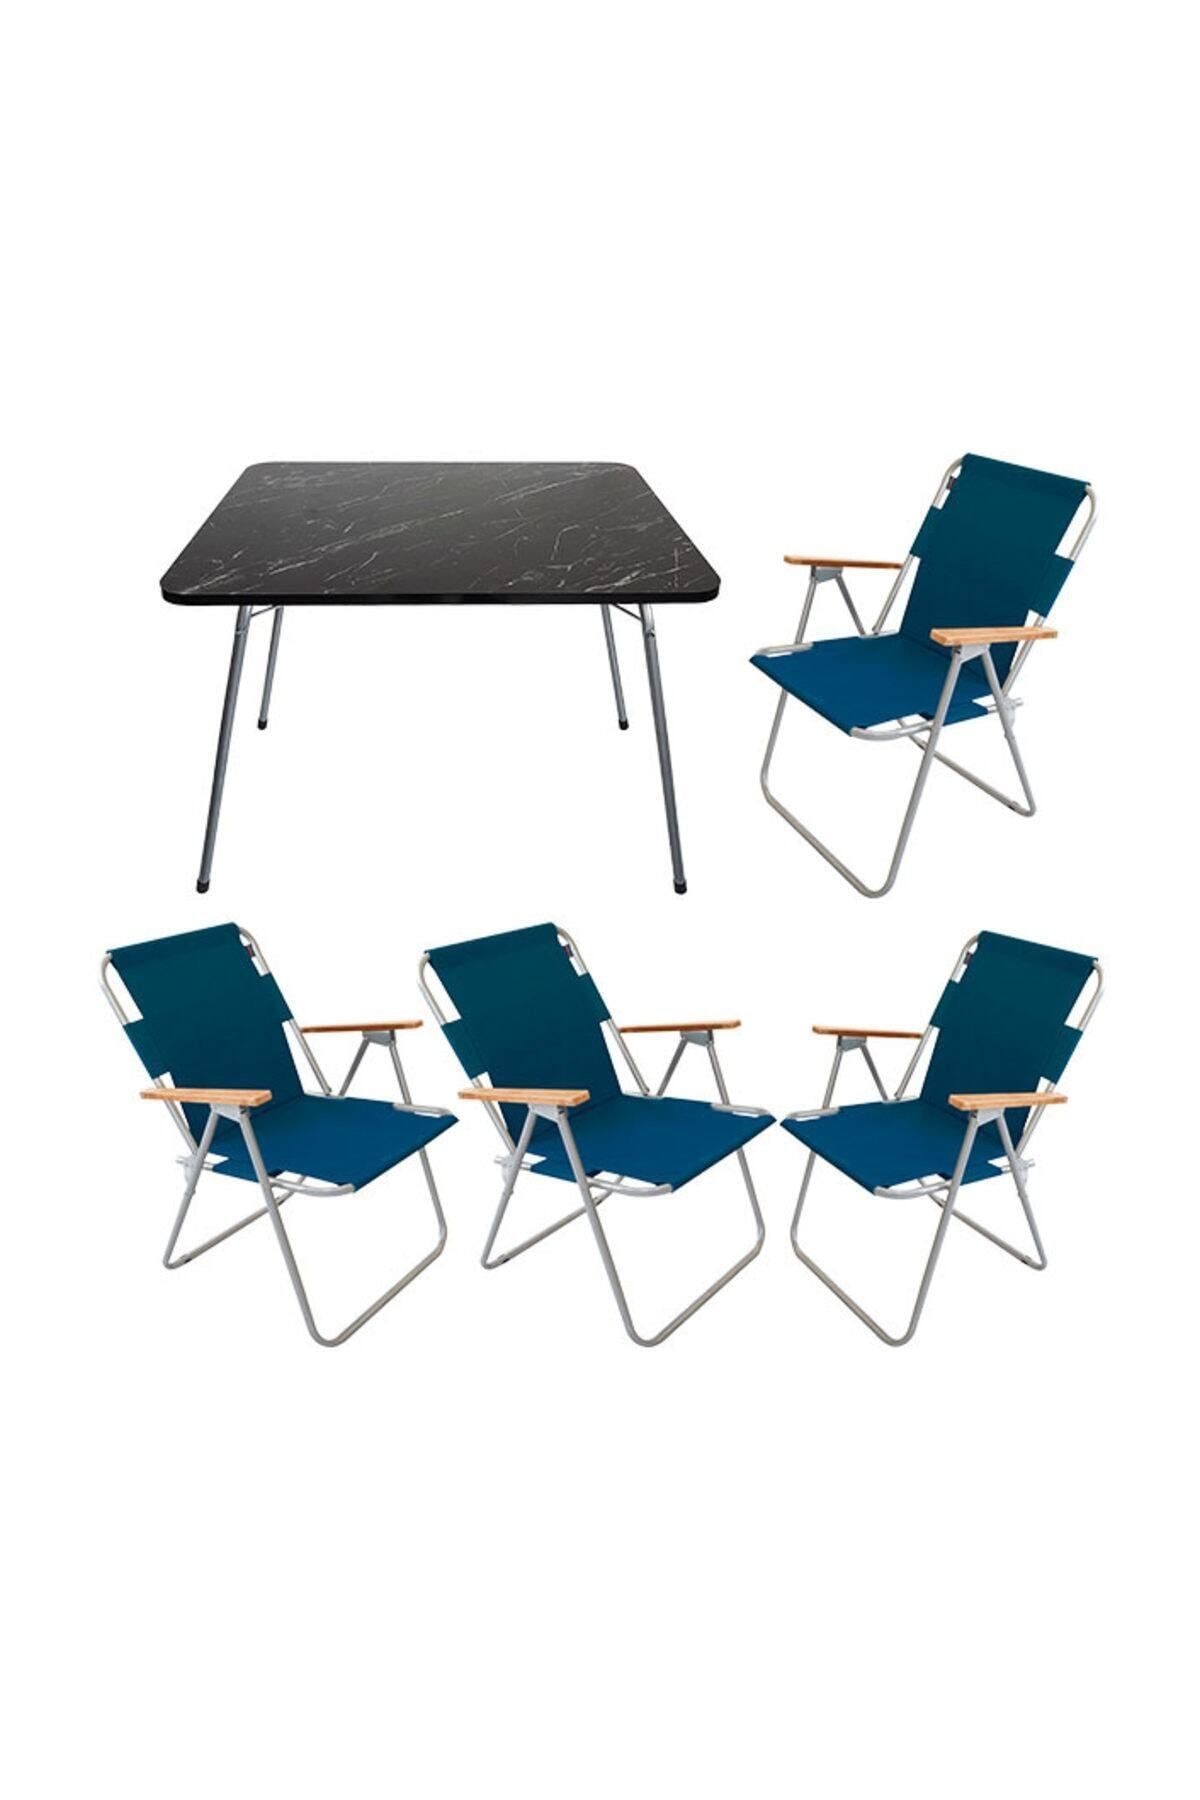 Bofigo Katlanır Granit Masa ve Mavi Katlanır Sandalye 4 Adet